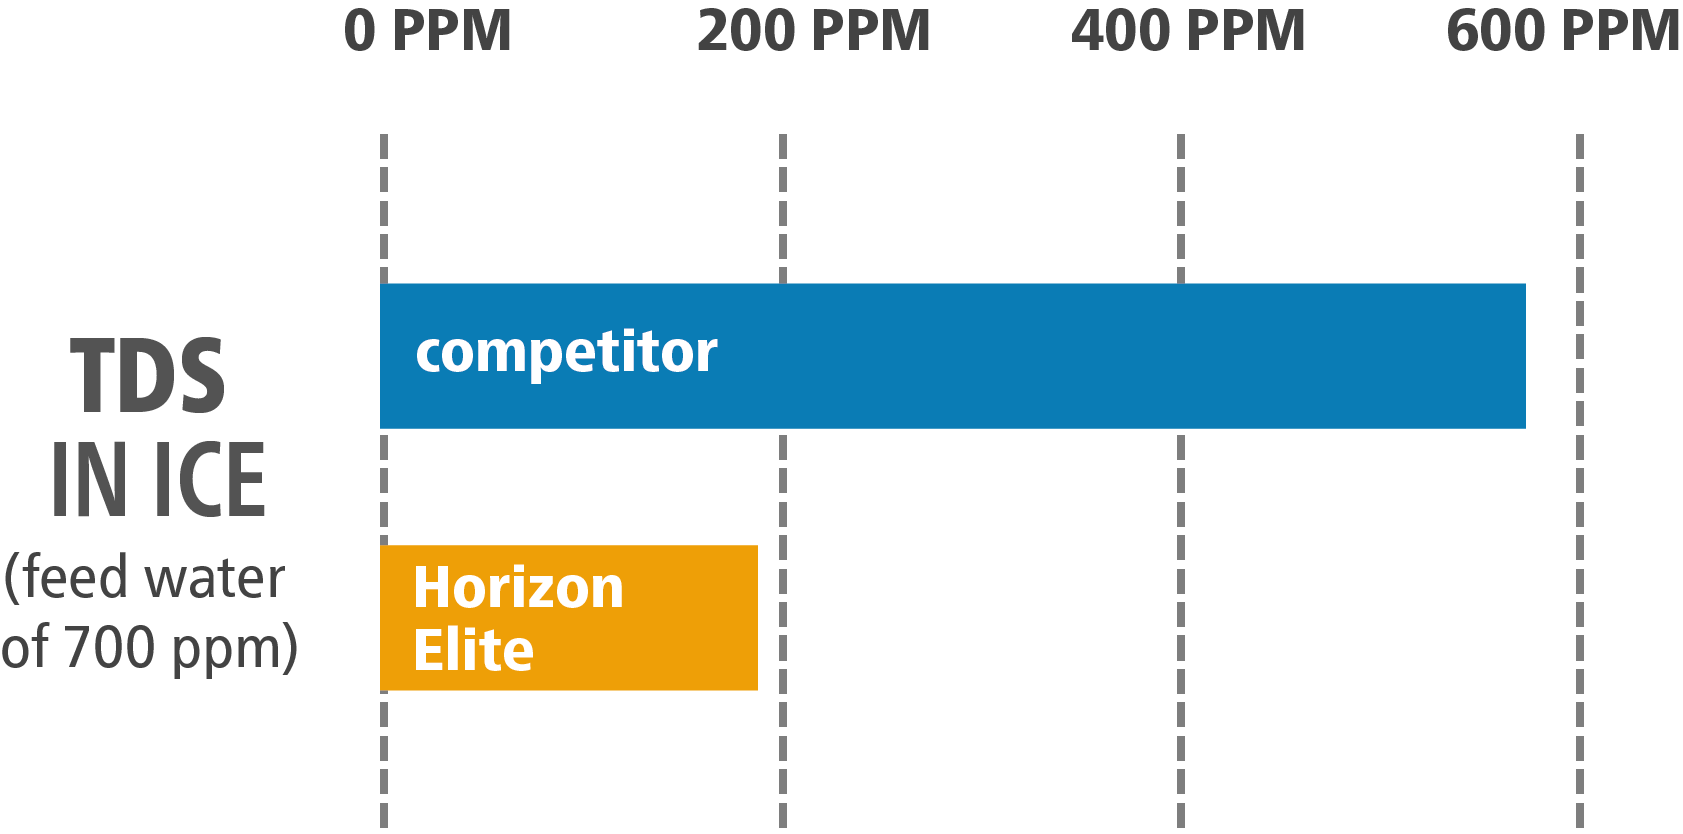 chart showing TDS in ice - competitor versus Horizon Elite